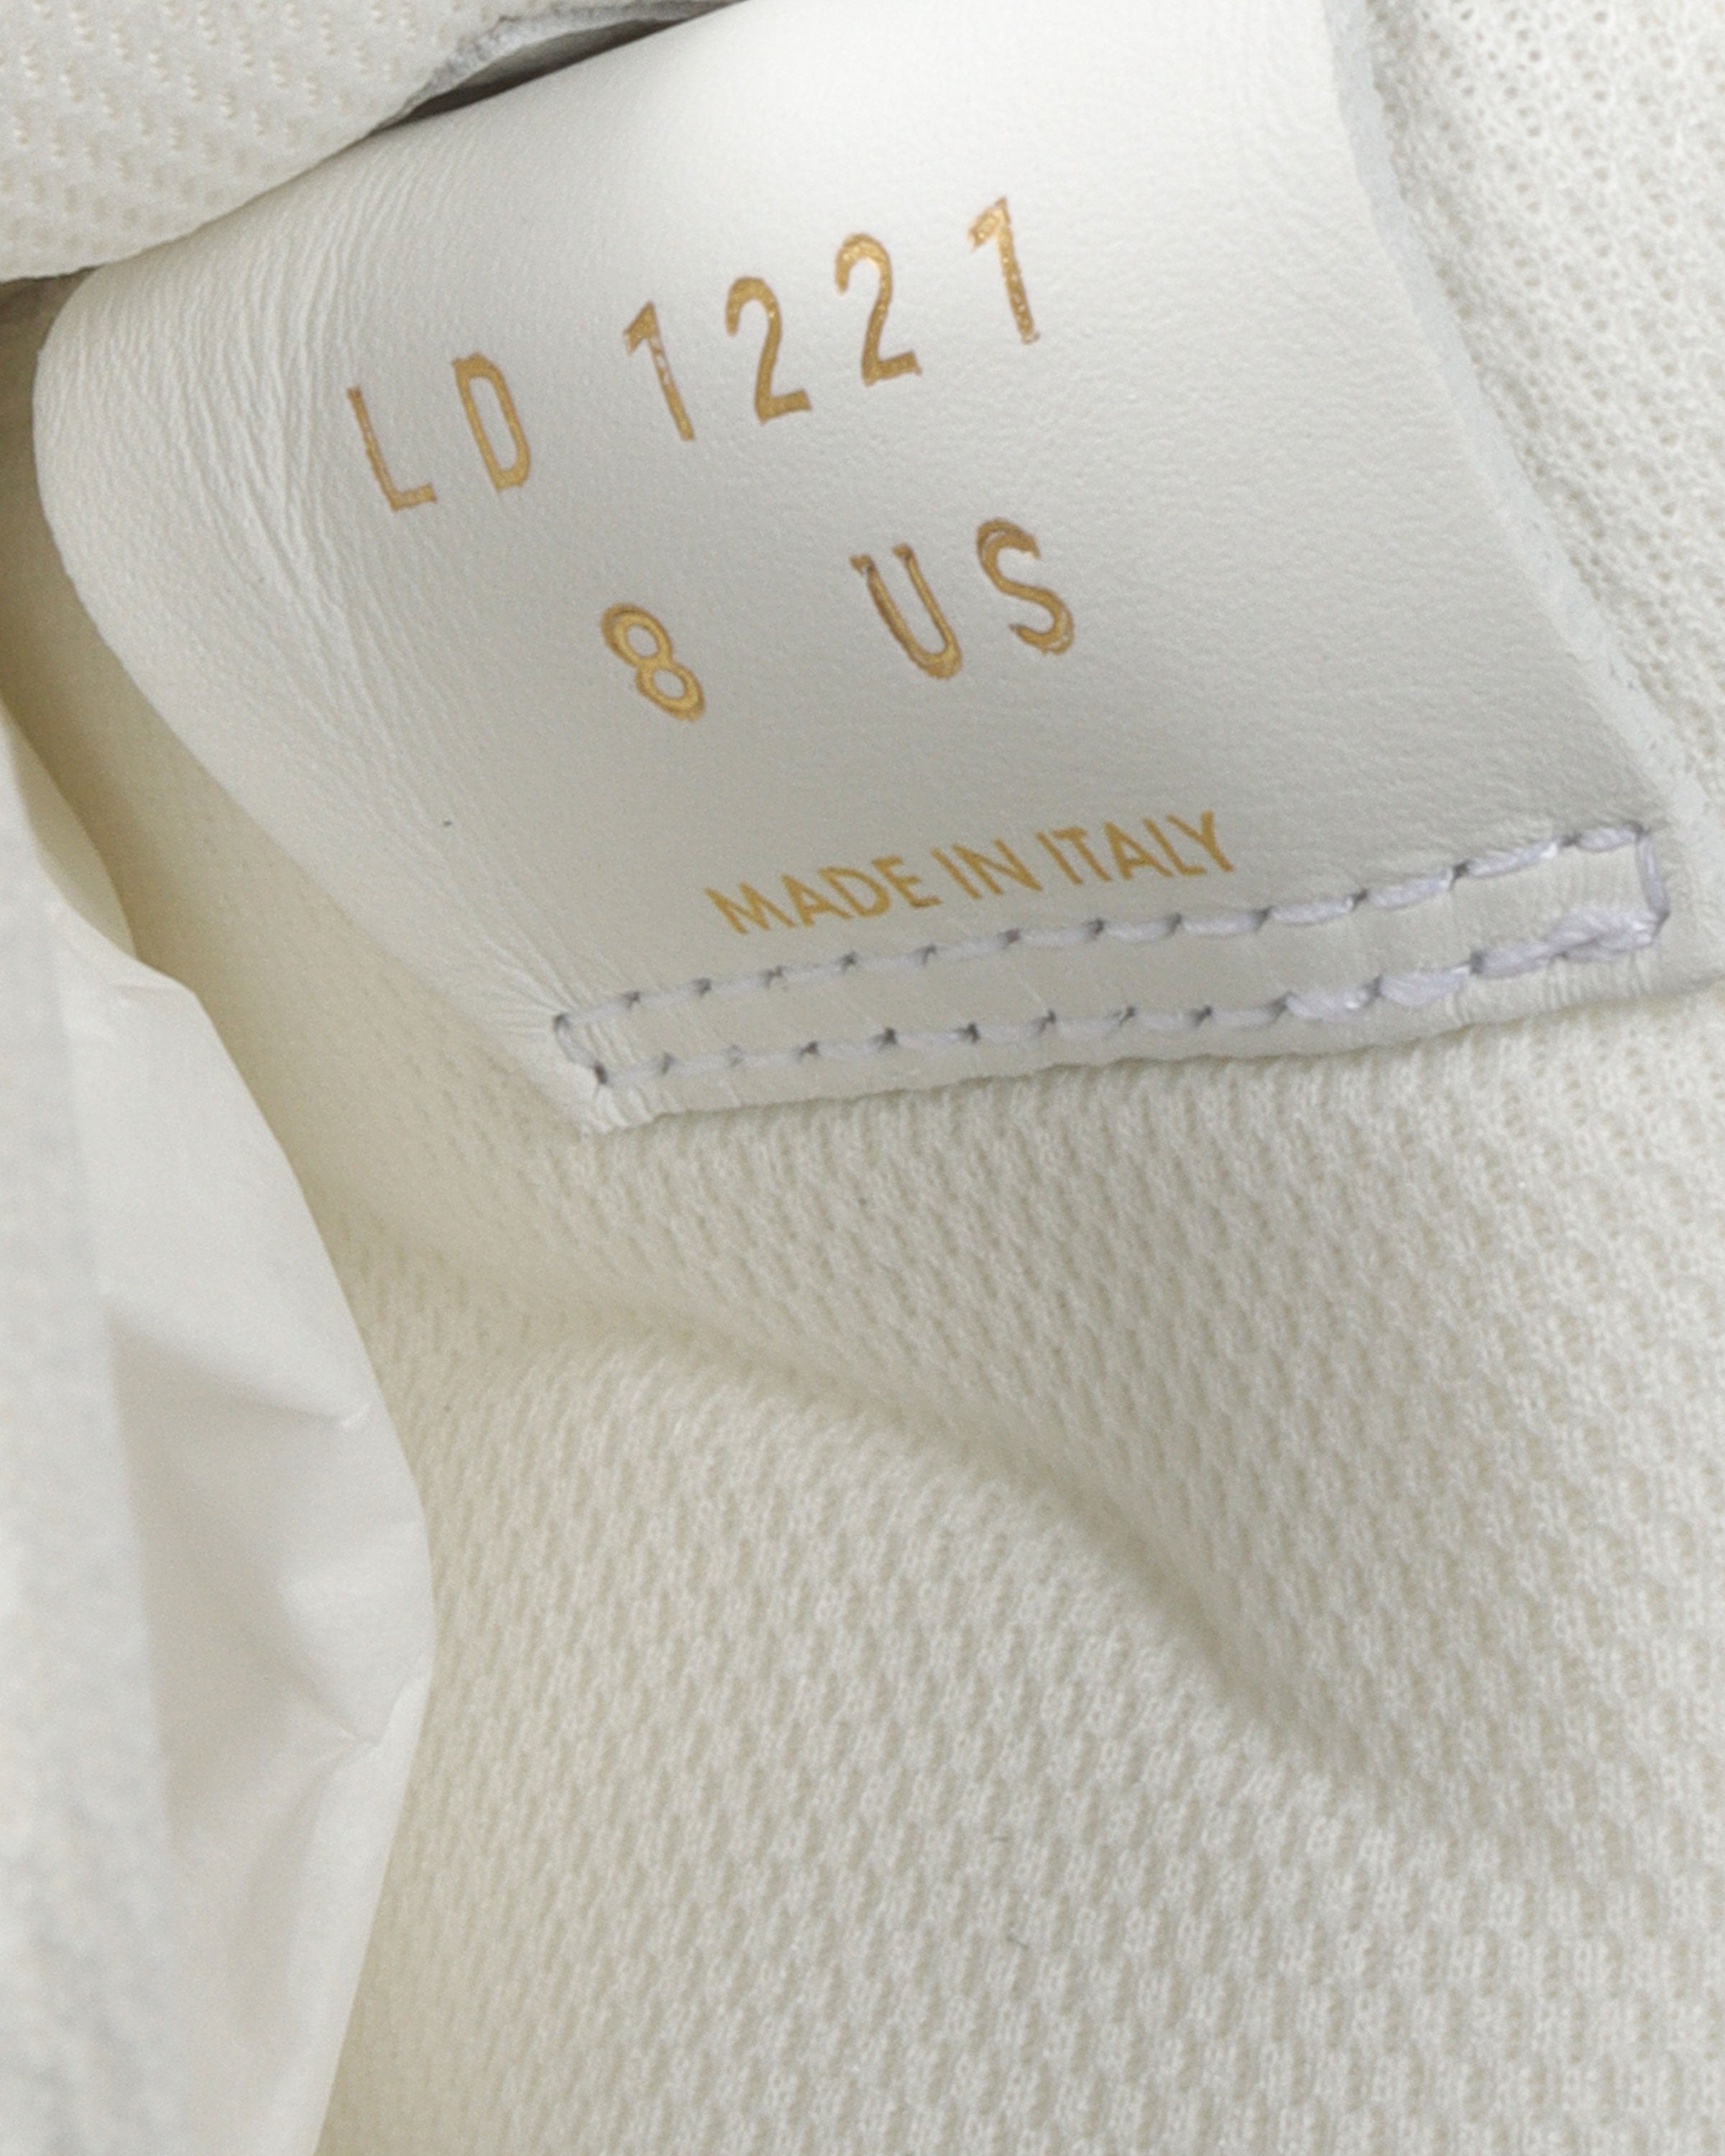 Nike Air Force 1 de Louis Vuitton: primeras imágenes de la